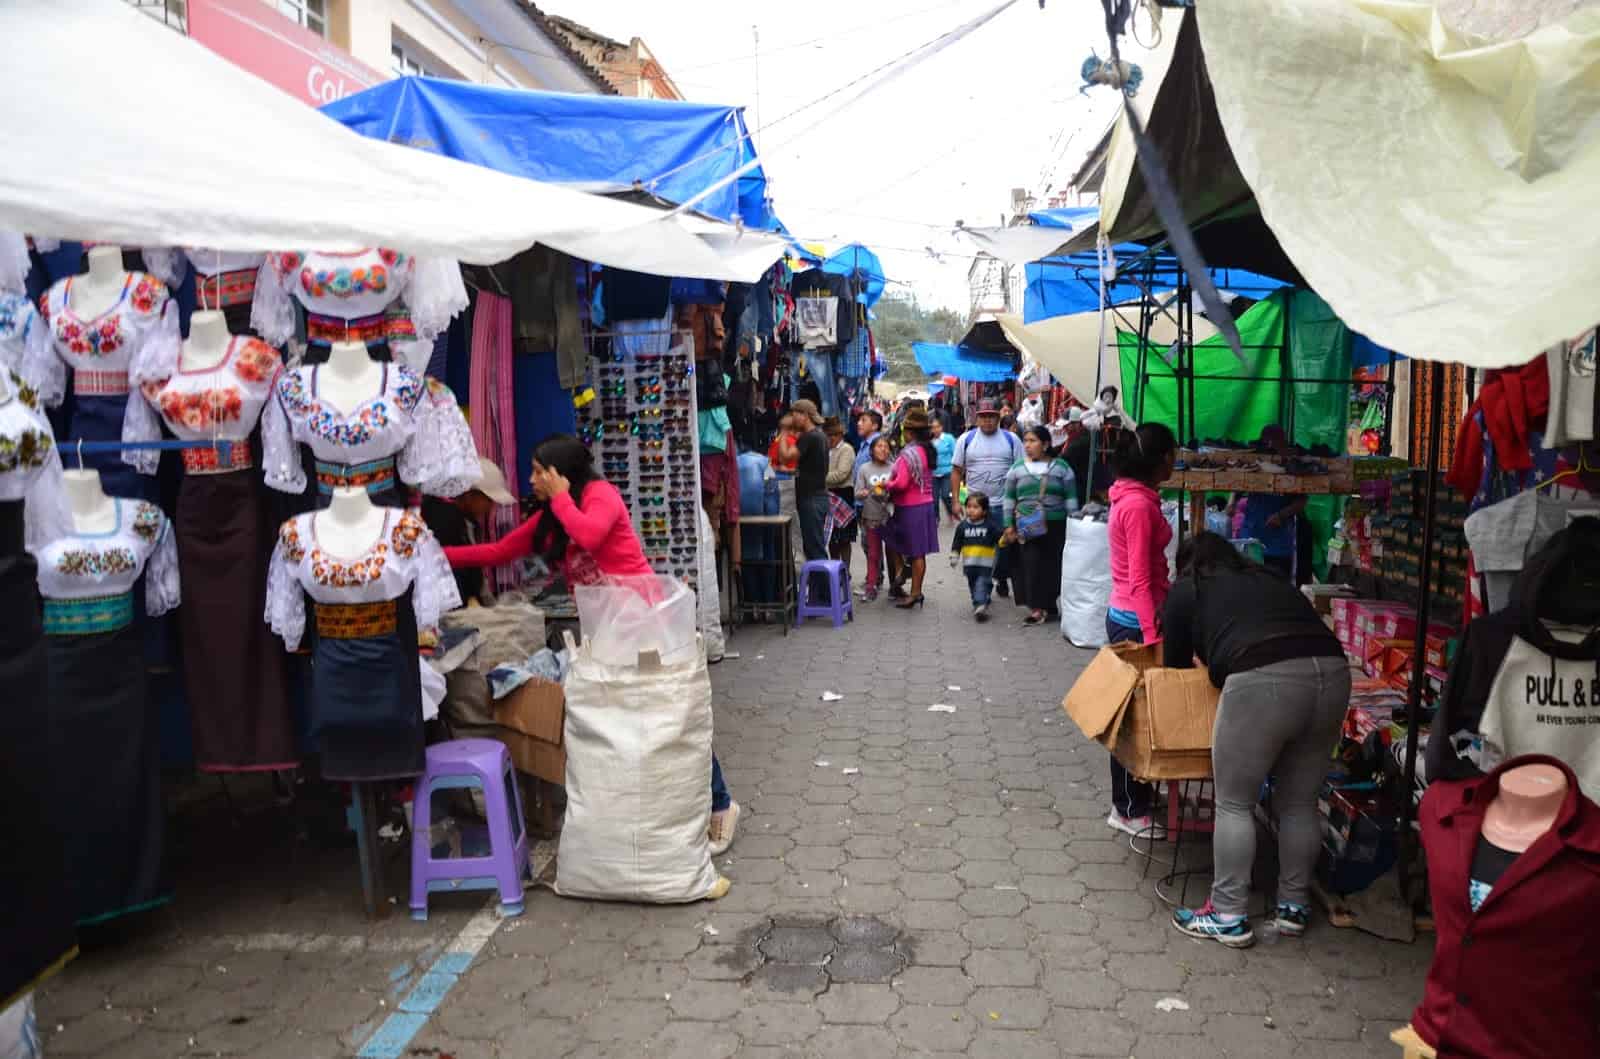 Daily market in Otavalo, Ecuador